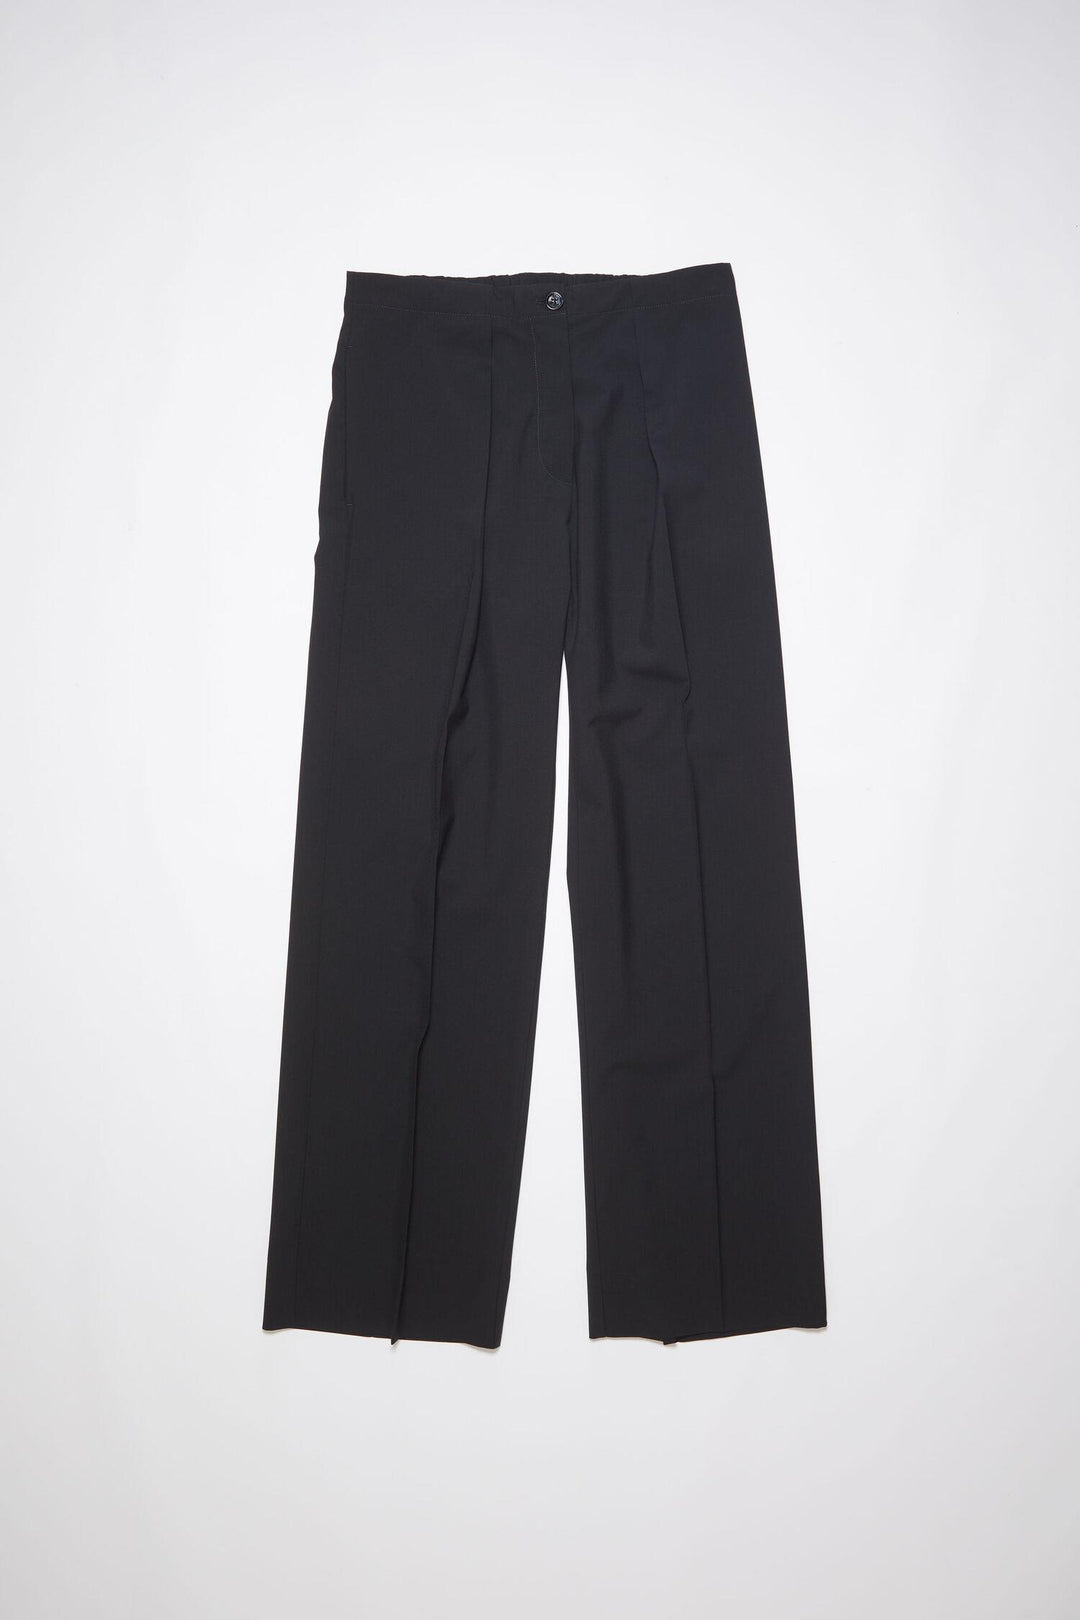 ACNE STUDIOS - Tailored Trousers - Black - Dale